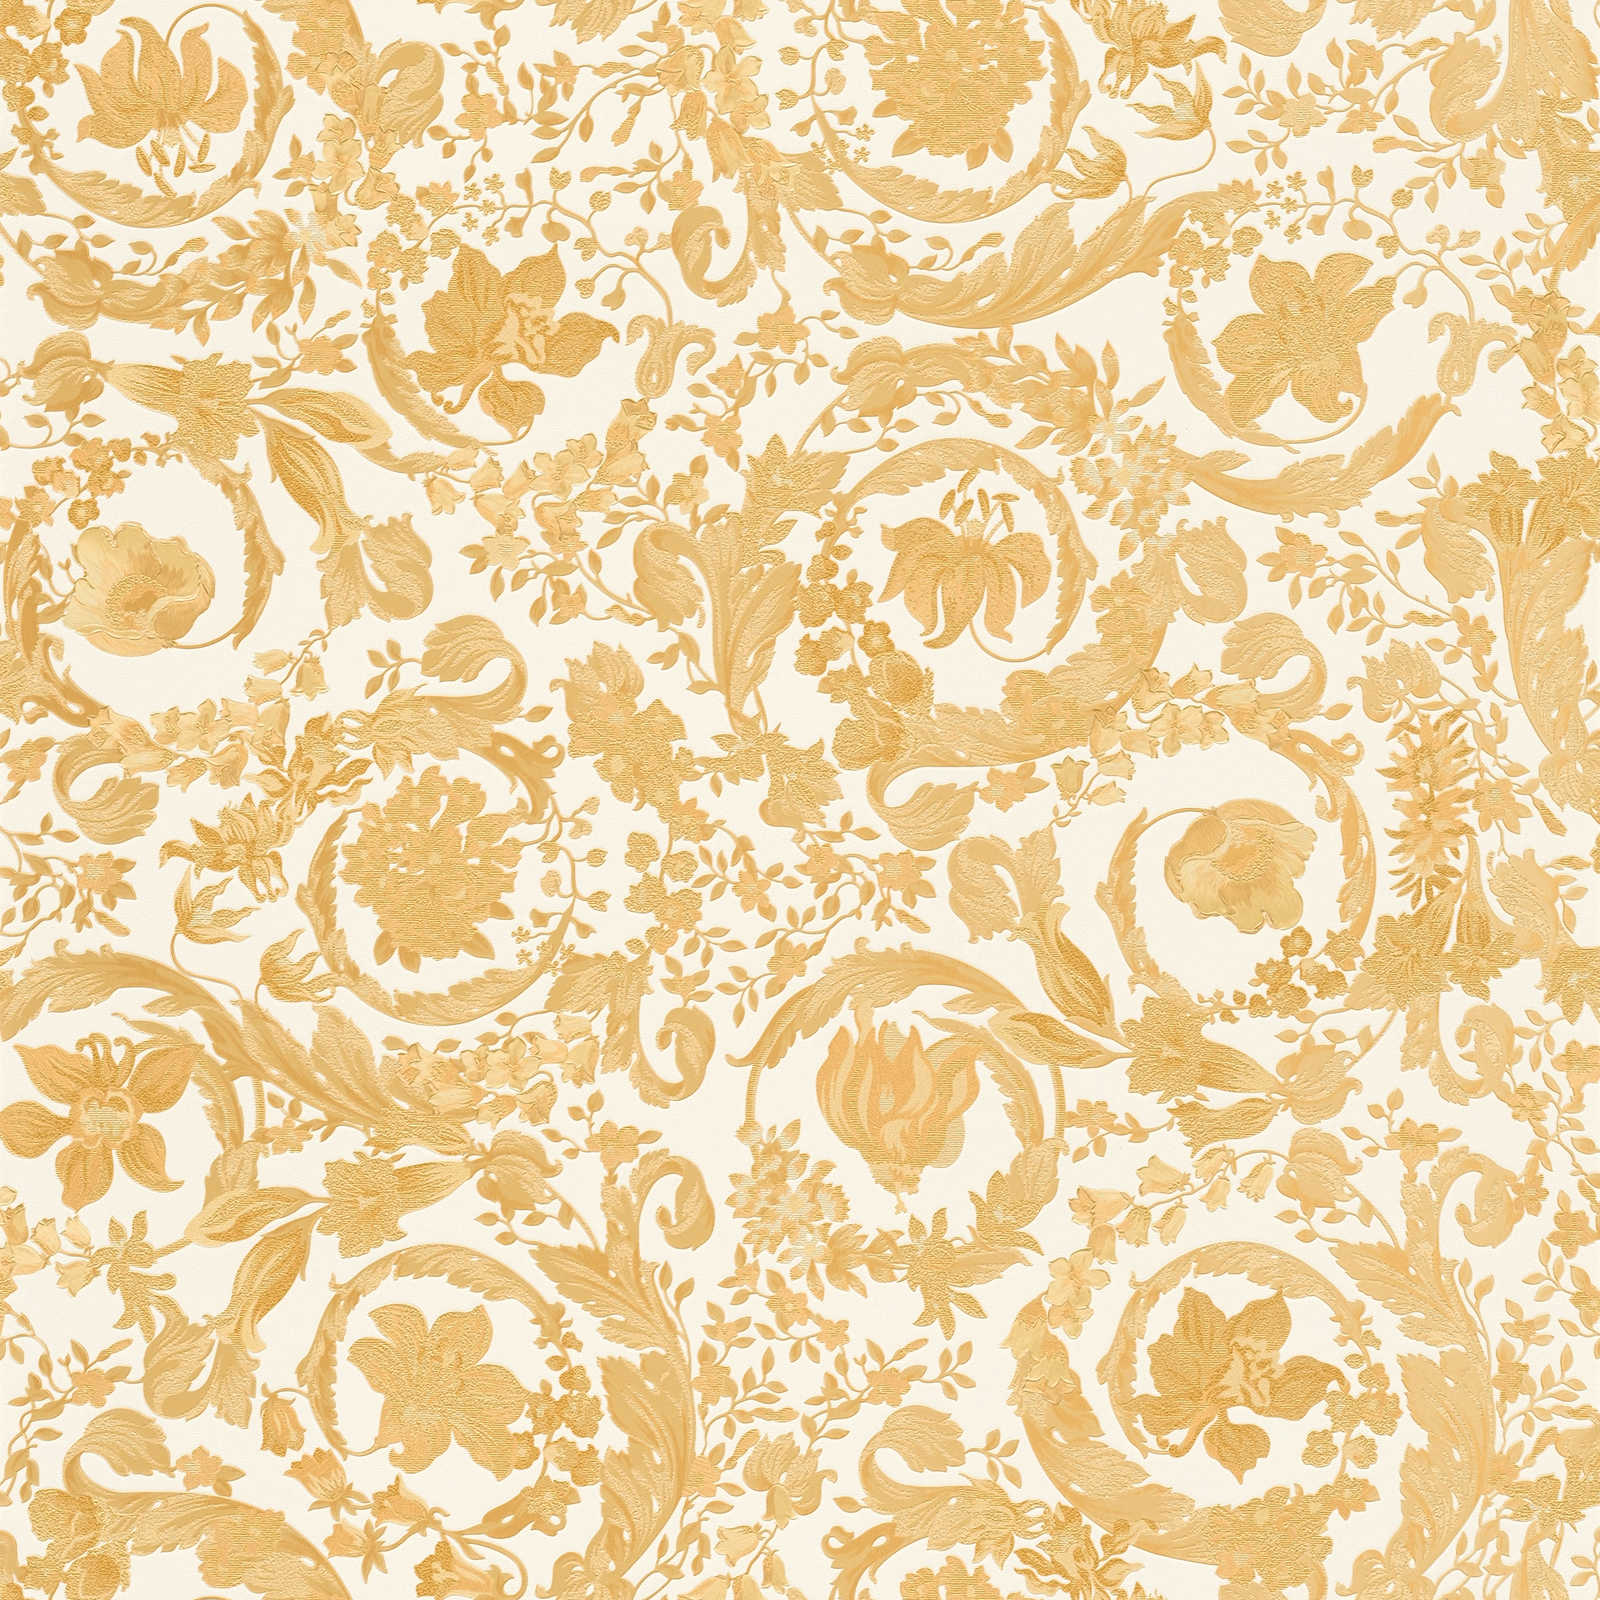         Blumen Tapete VERSACE Gold Ornament-Muster – Creme
    